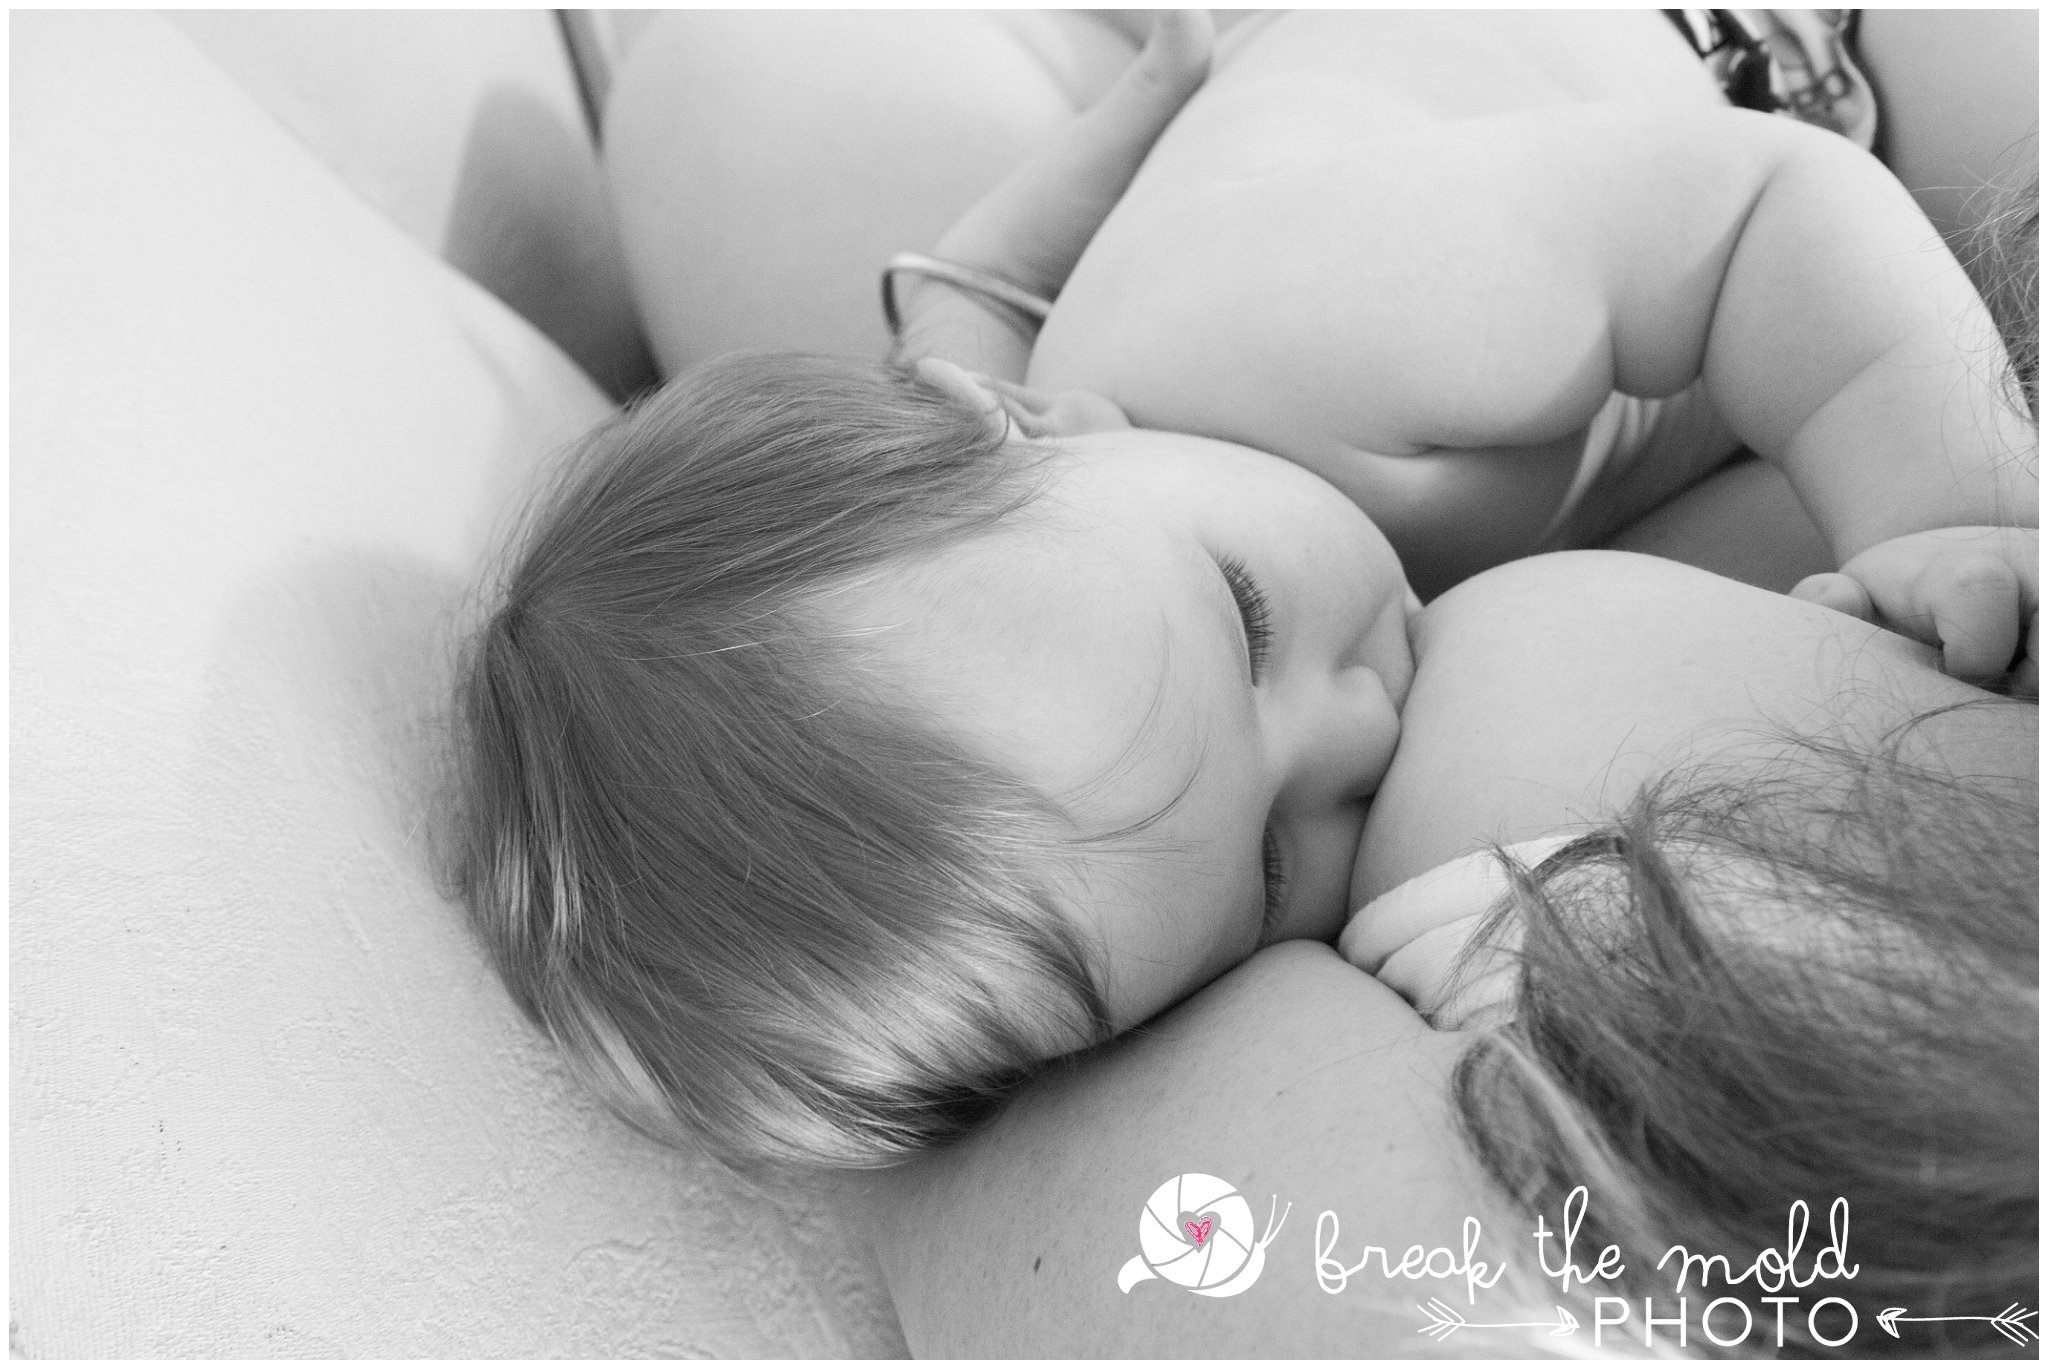 break-the-mold-photo-nursing-body-love-baby-pregnant-women-powerful-breastfeeding-sessions_7207.jpg